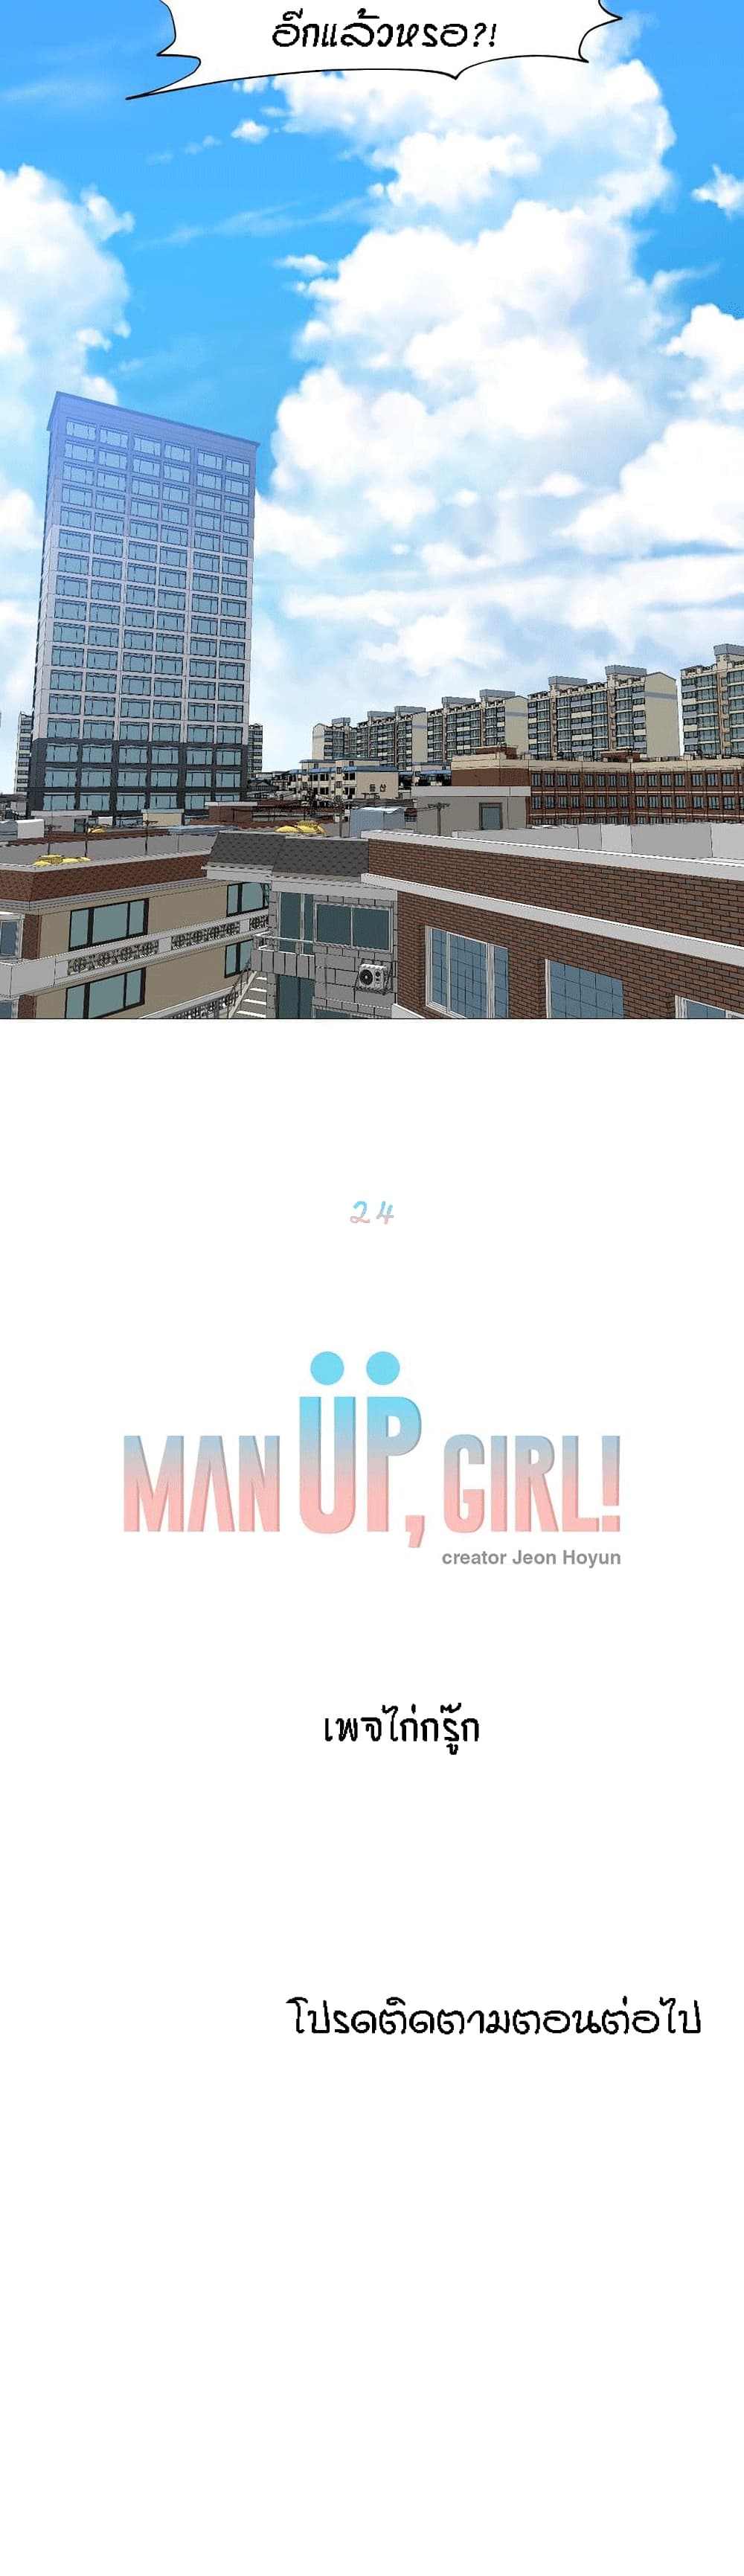 Man Up Girl 24-24